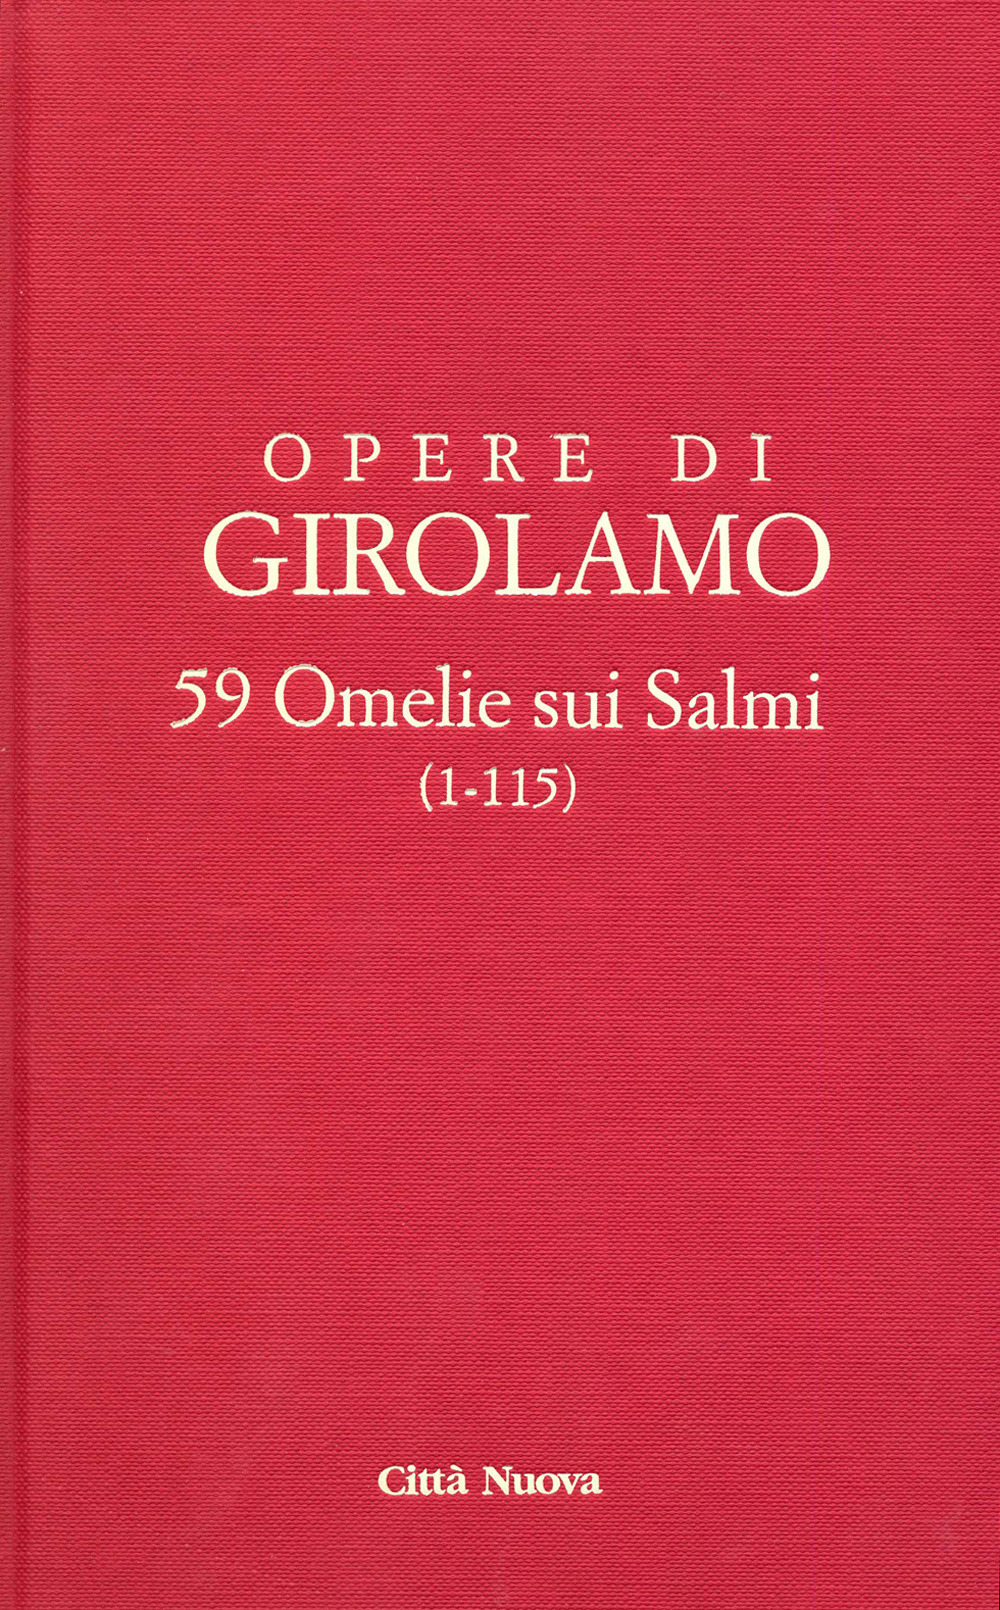 Opere di Girolamo. Vol. 9: 59 Omelie sui Salmi (1-115)